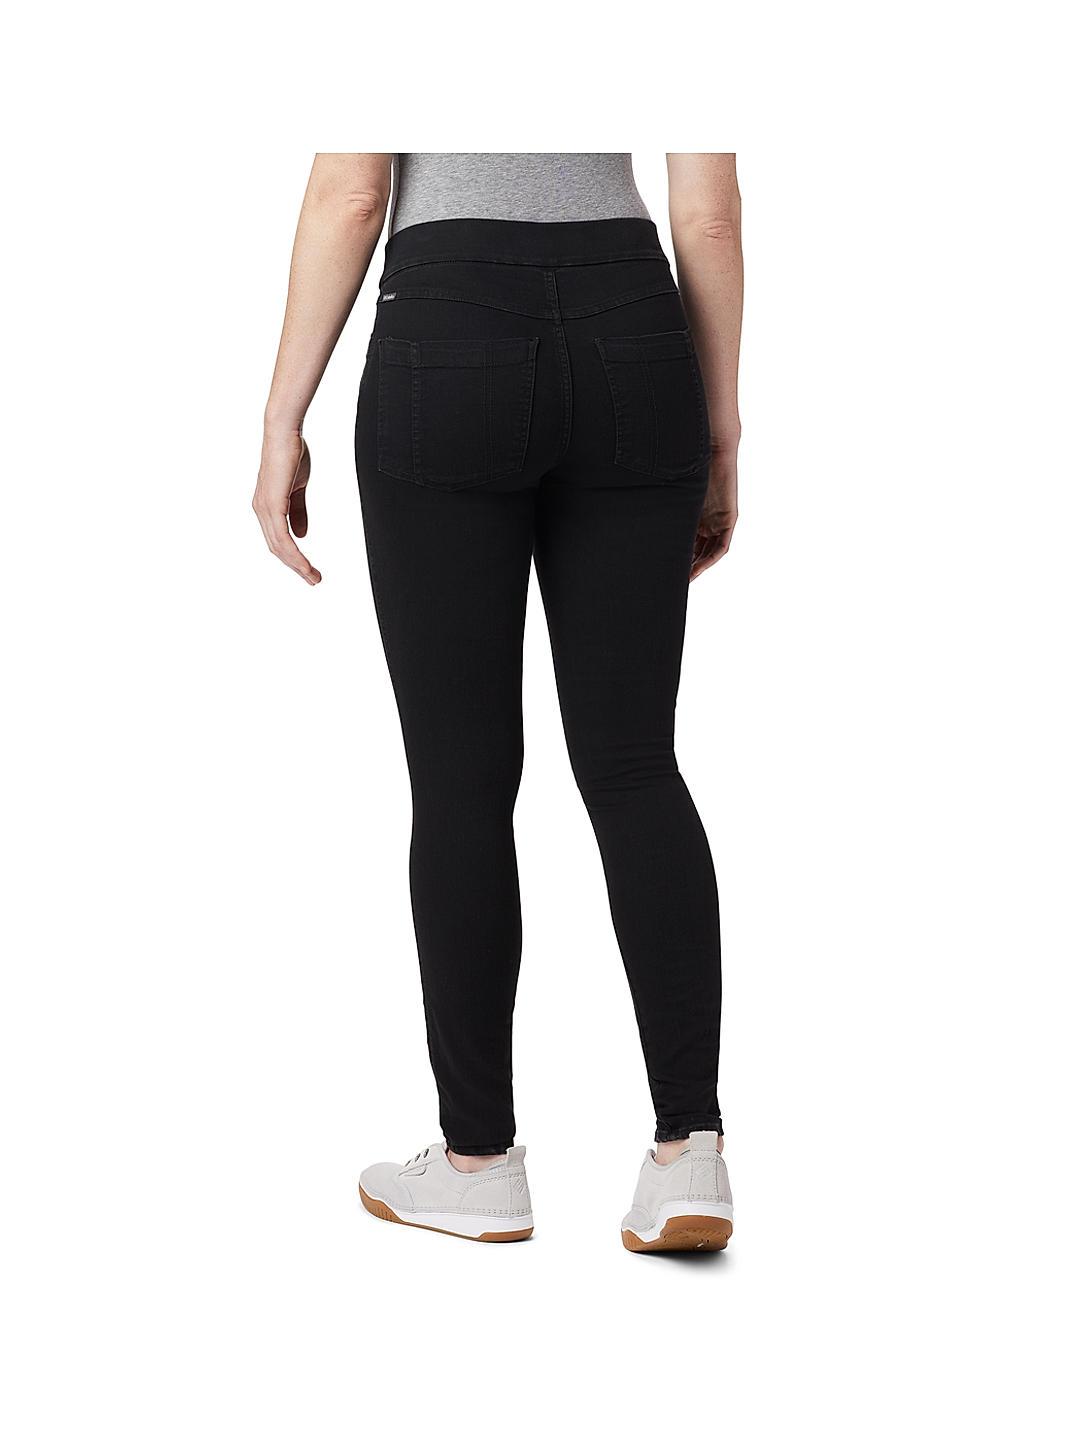 Women Skinny Jeggings Black Stretchy Sexy Pants Leggings Jeans Soft Small  Medium - Walmart.com